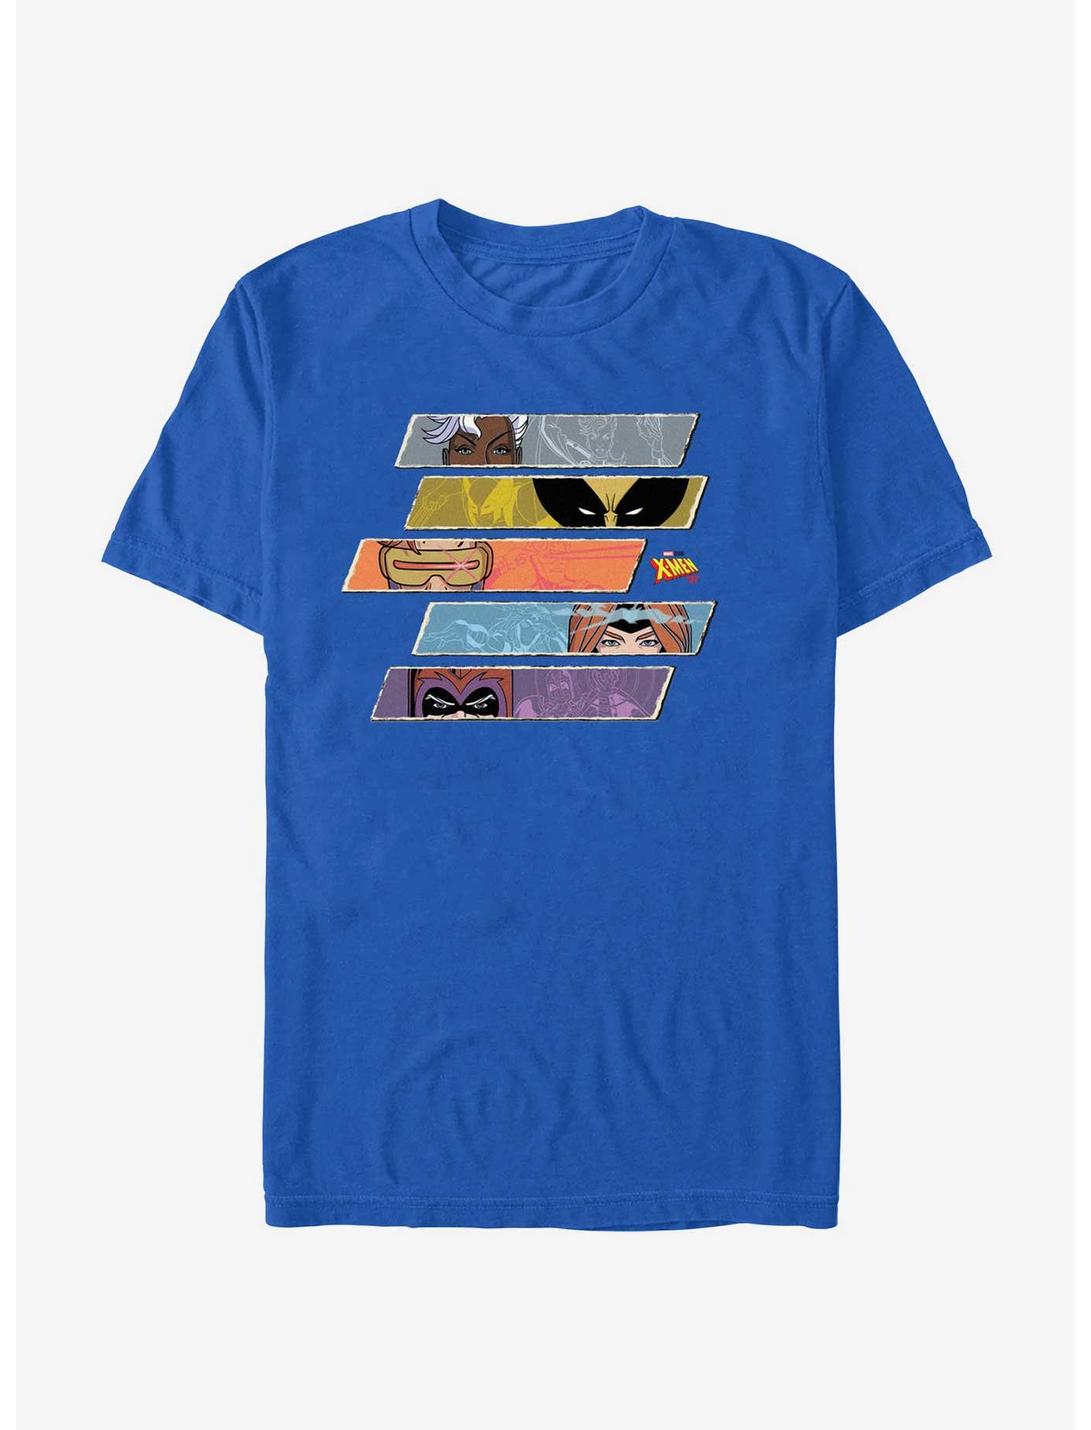 Marvel X-Men '97 Eyes T-Shirt, ROYAL, hi-res